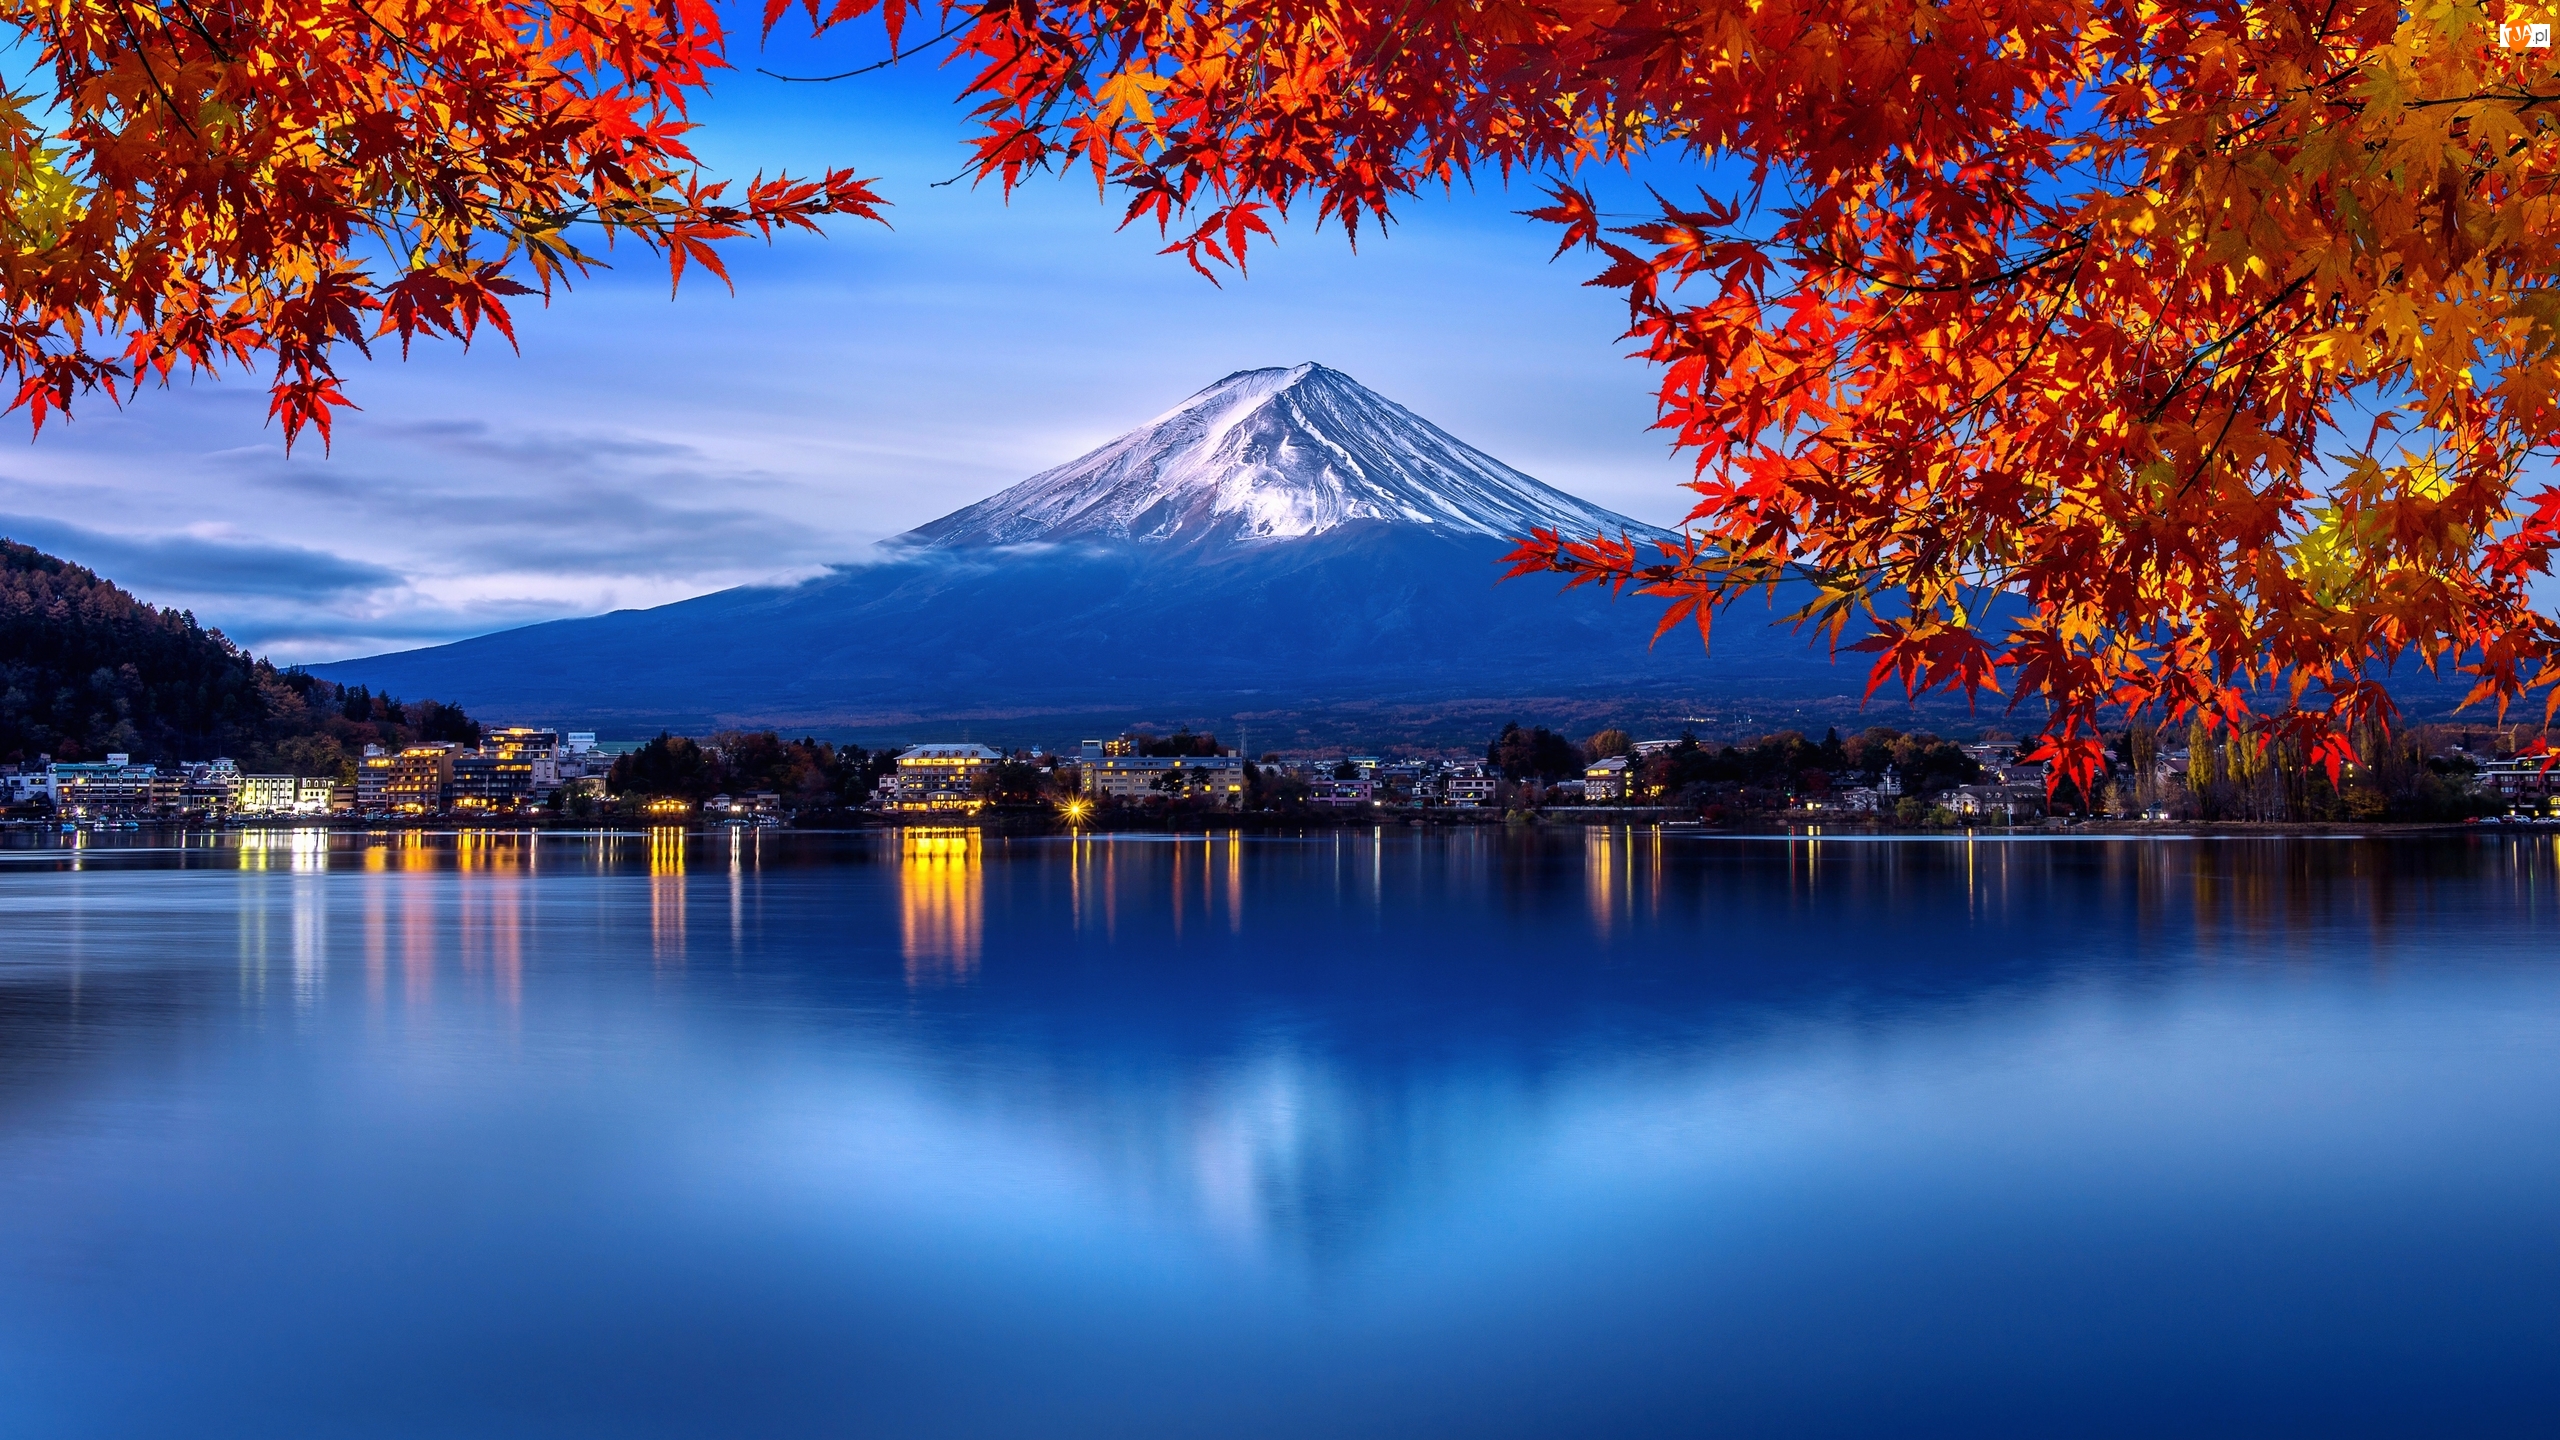 Drzewa, Japonia, Jezioro, Klon, Góra Fudżi, Lake Kawaguchi, Liście, Stratowulkan